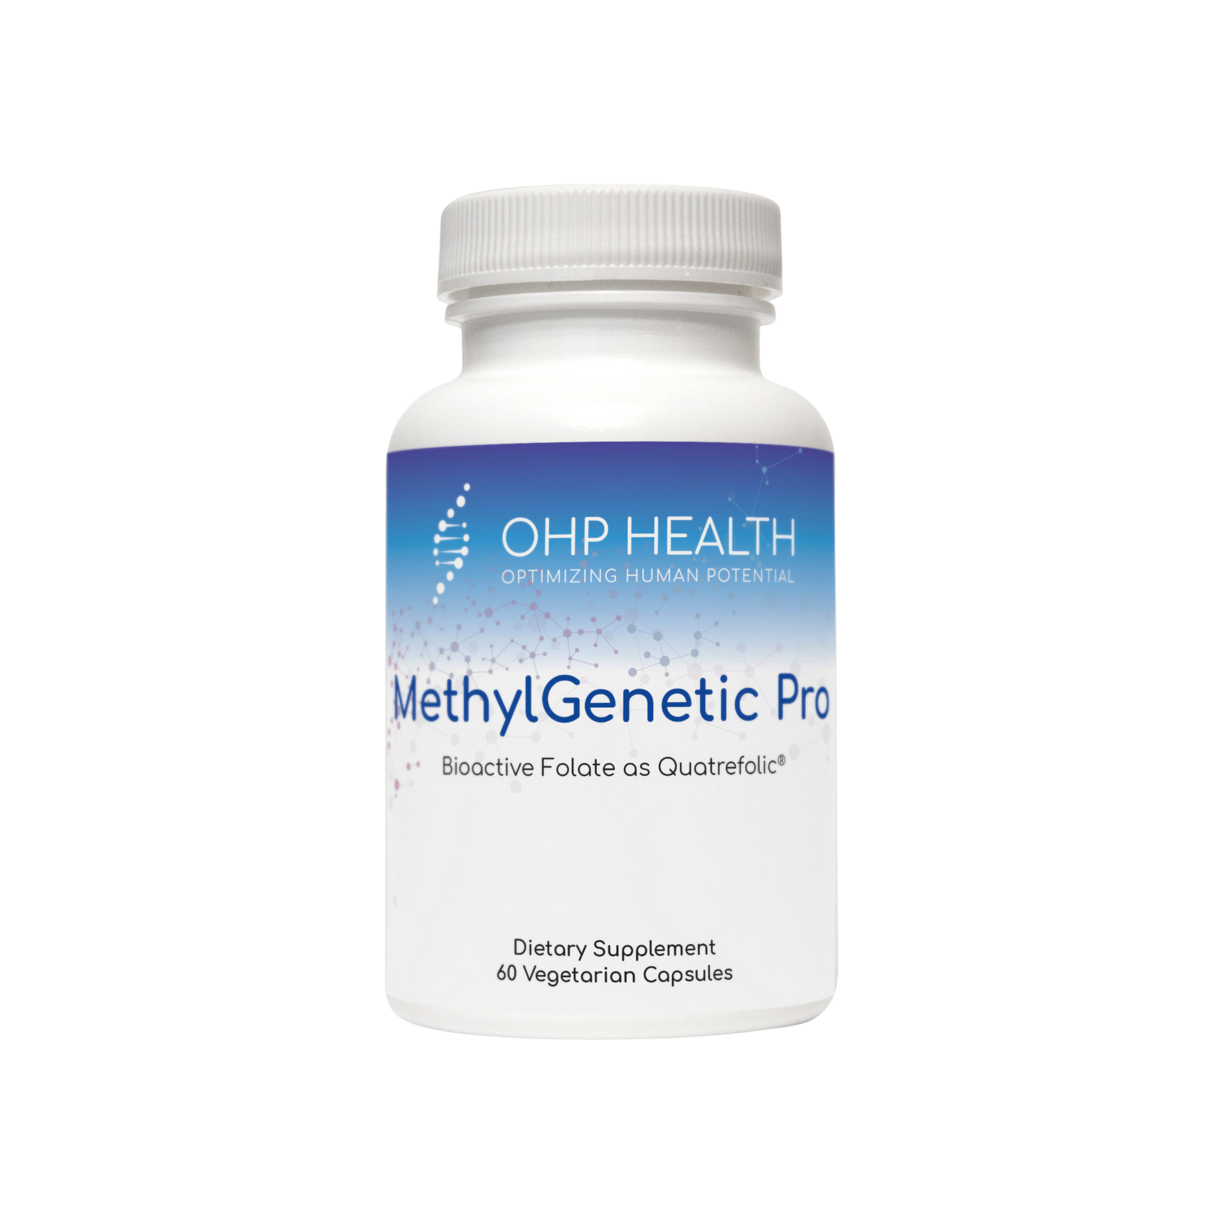 Chip health MethylGenetic Pro | 60 capsules.